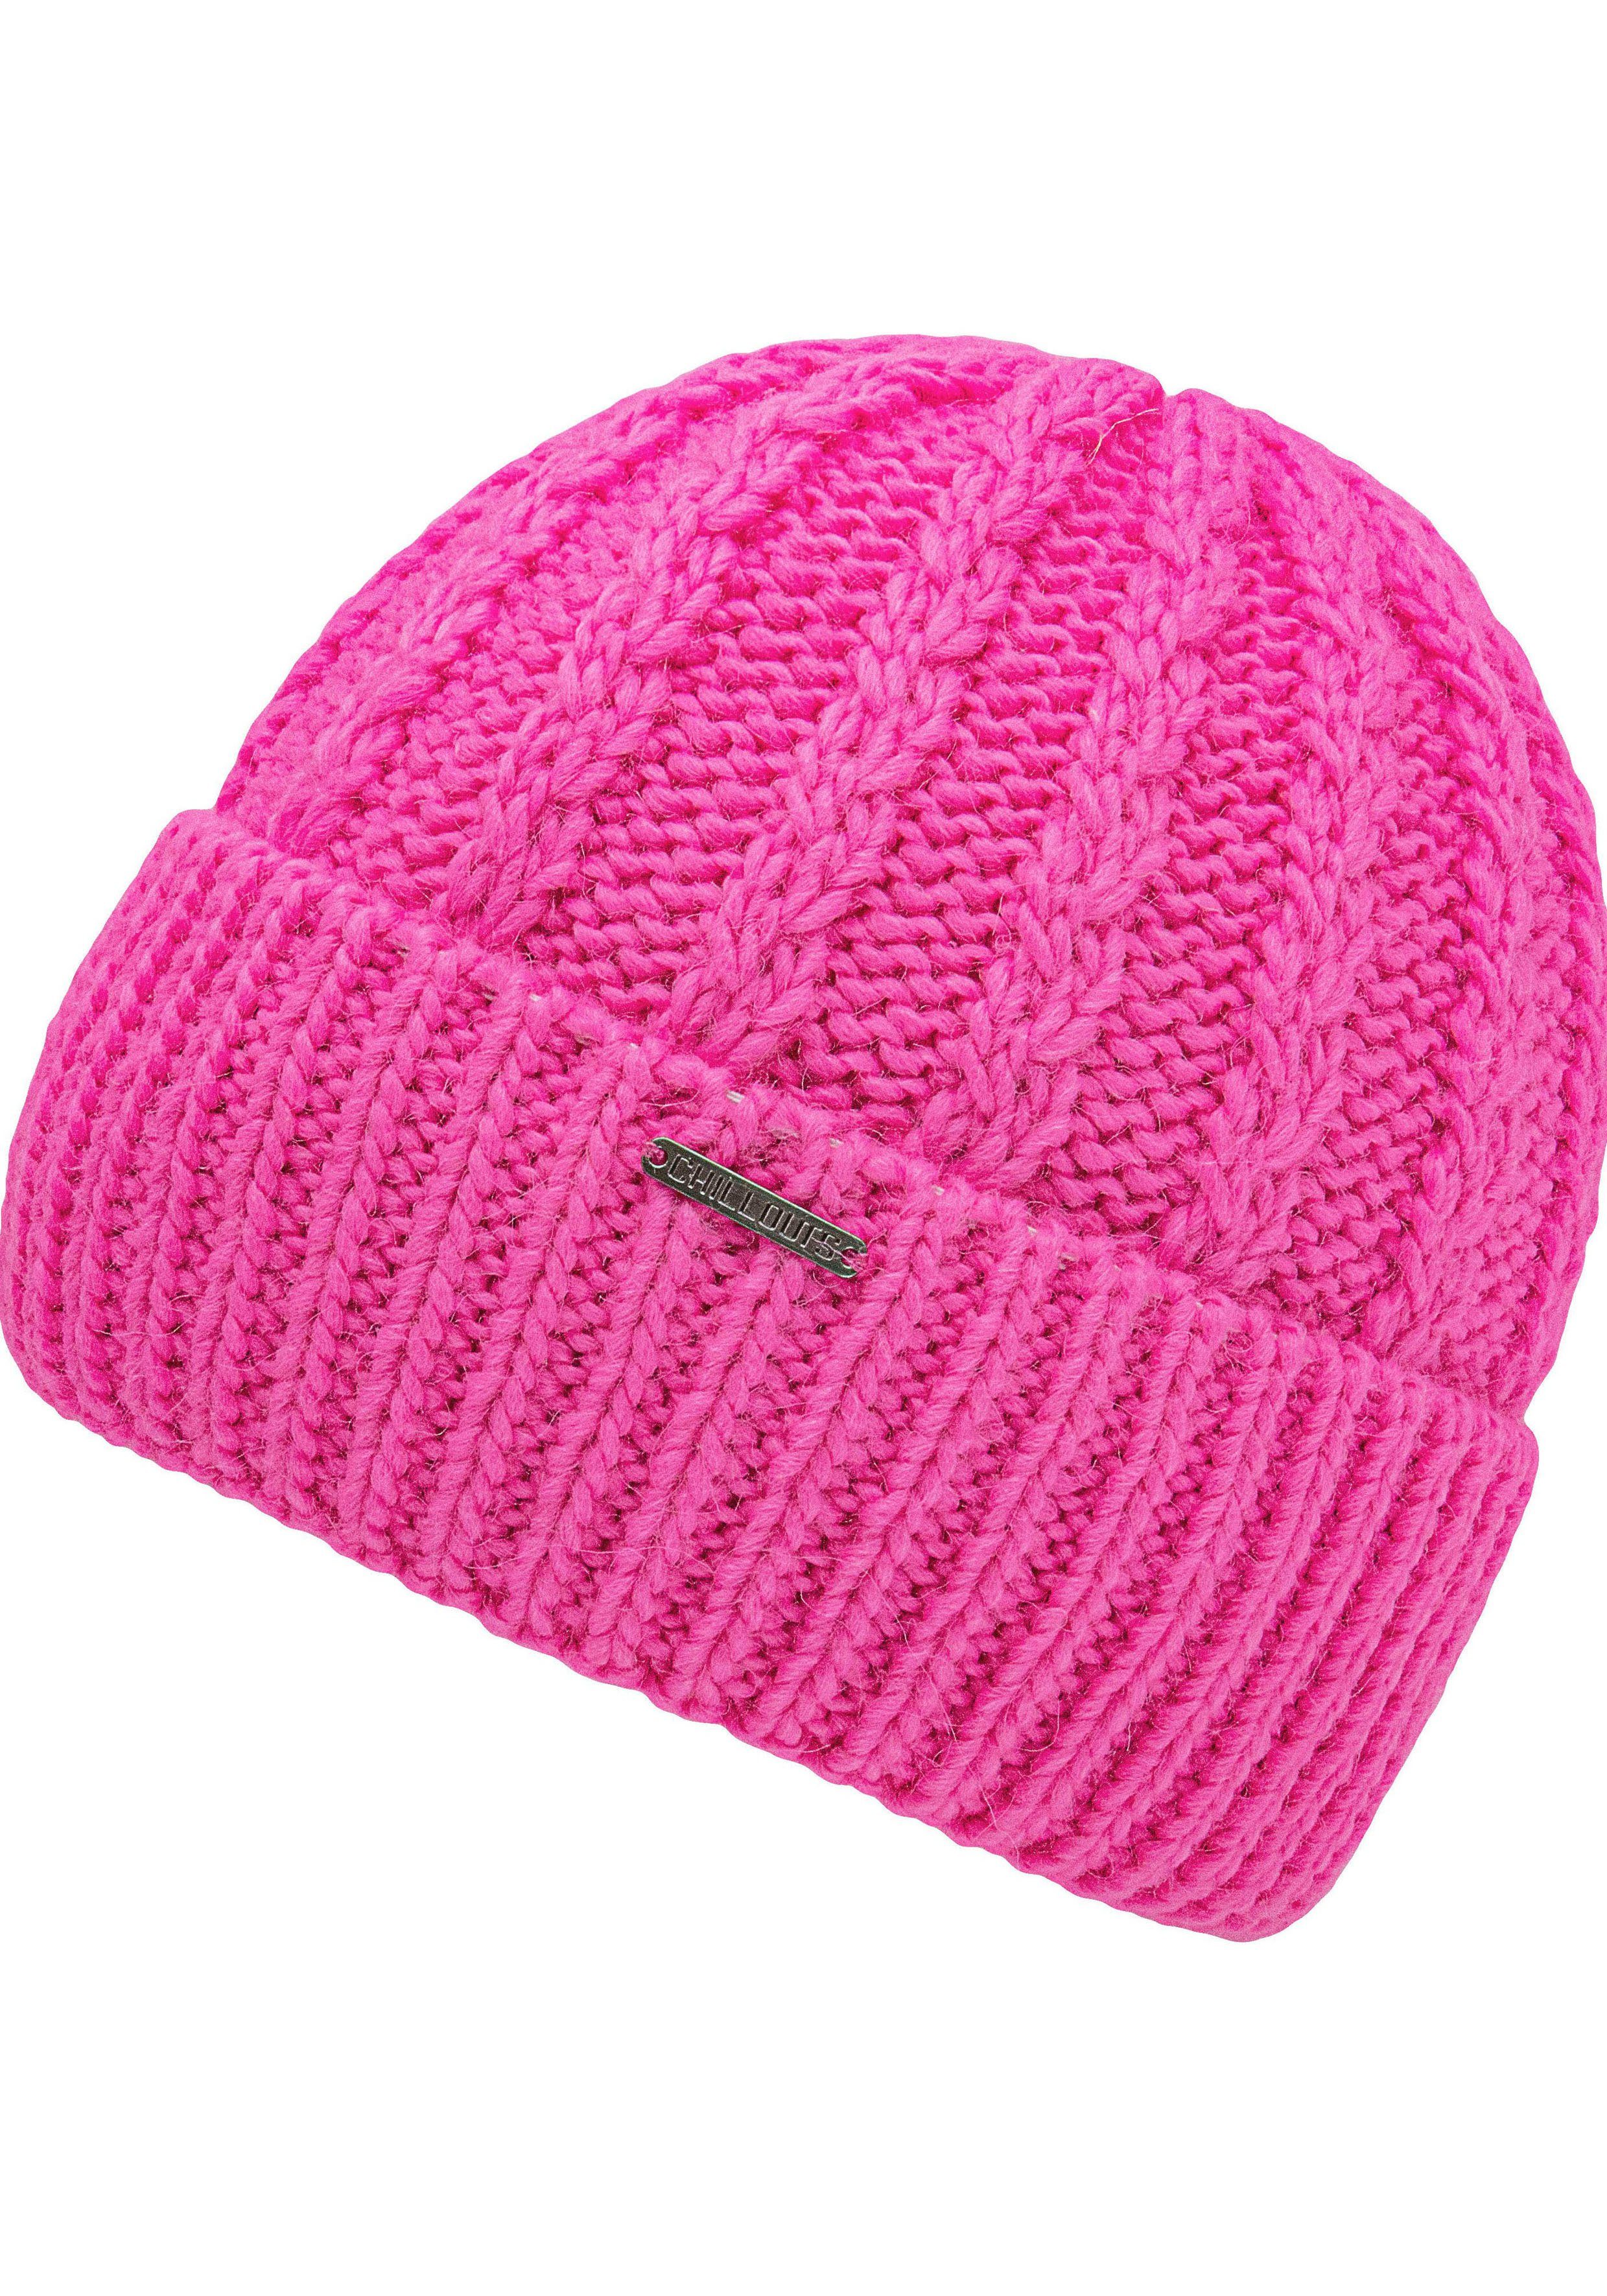 Mit Zopfmuster Strickmütze pink Nayla chillouts Hat